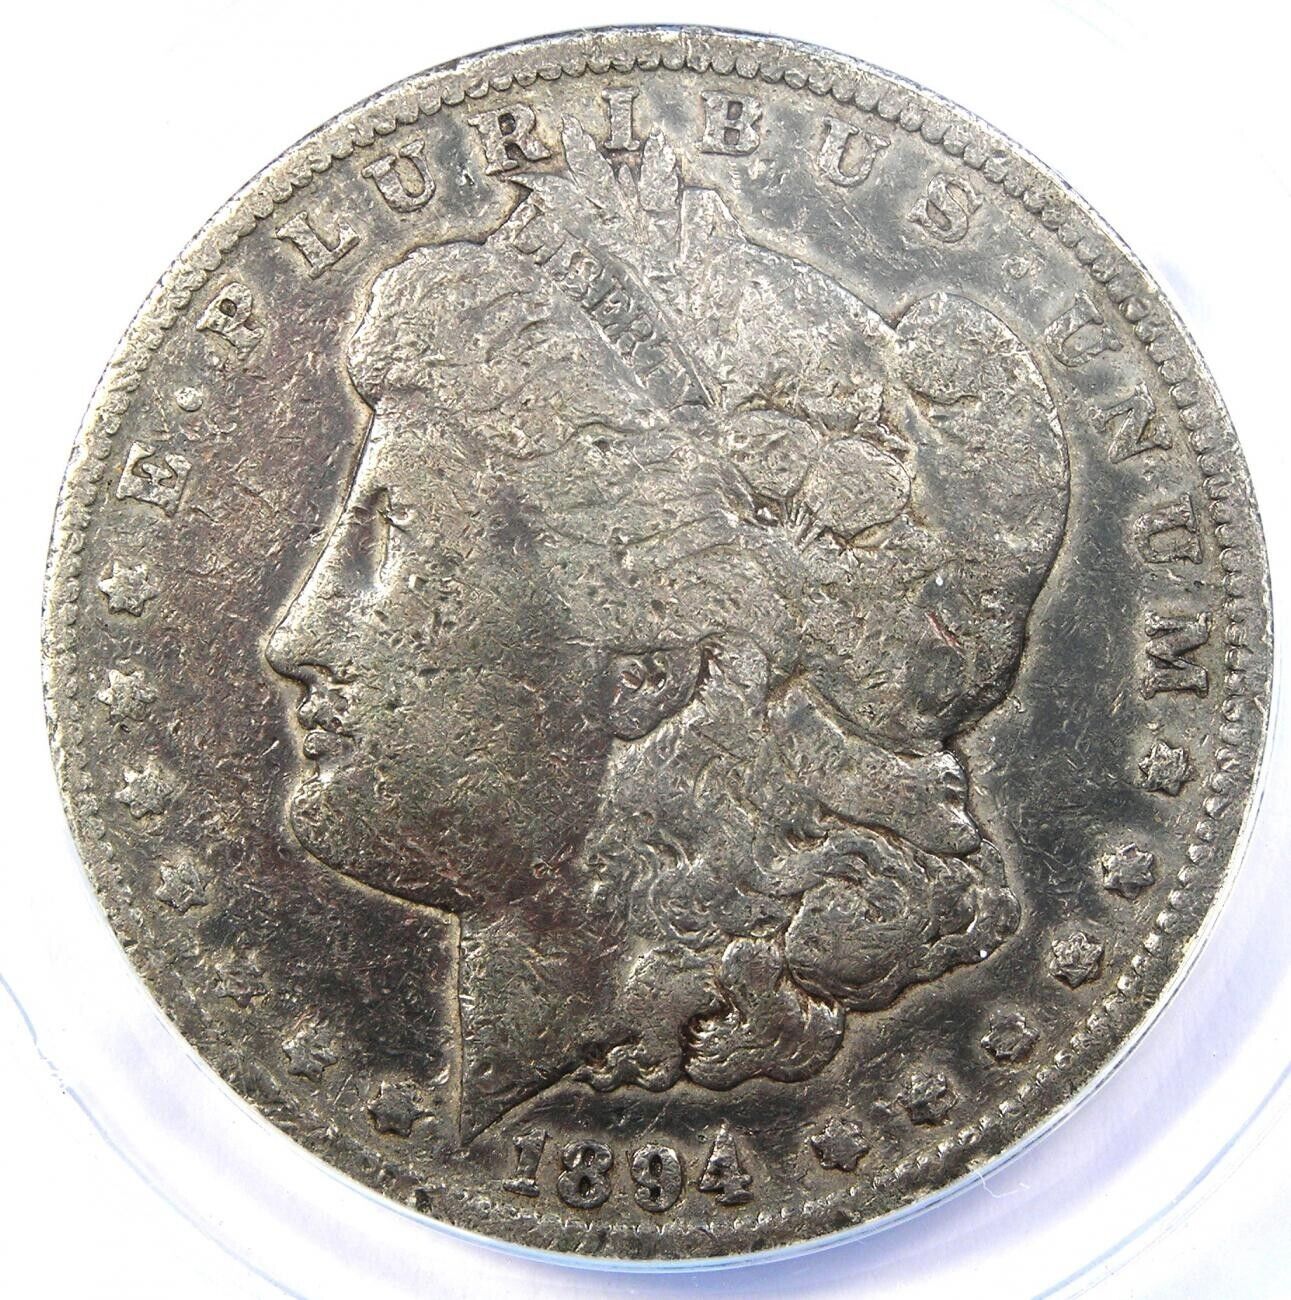 1894-P Morgan Silver Dollar $1 Coin 1894 - Certified ANACS VG8 Details - Rare